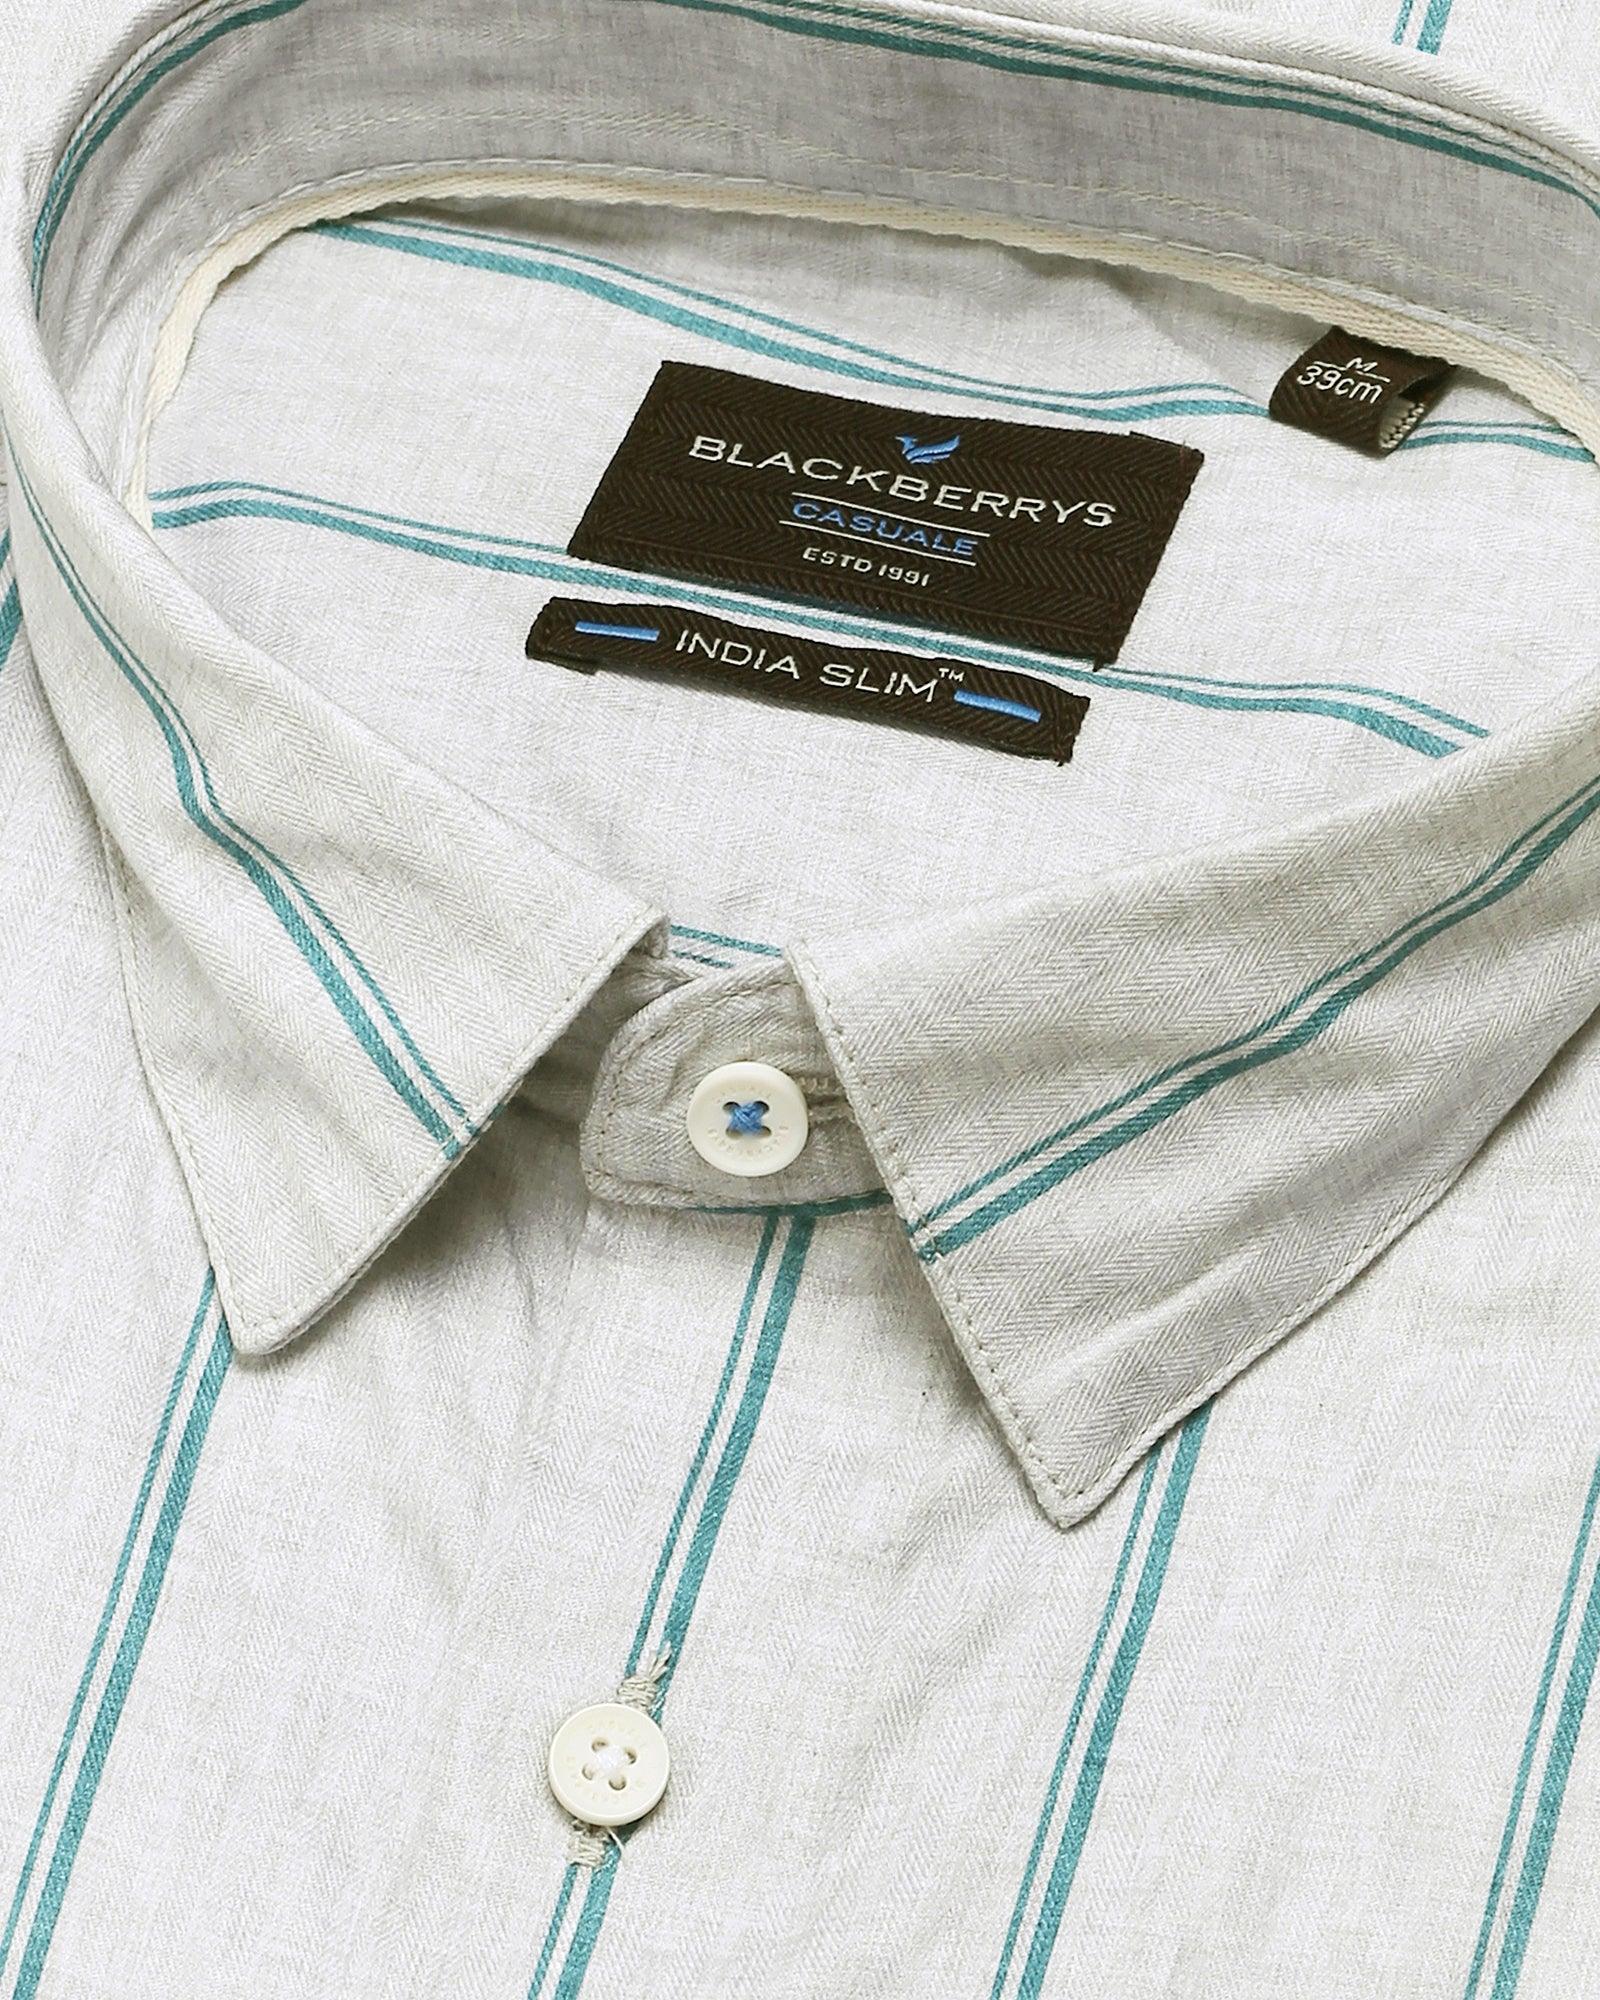 Casual Aqua Striped Shirt - Tim